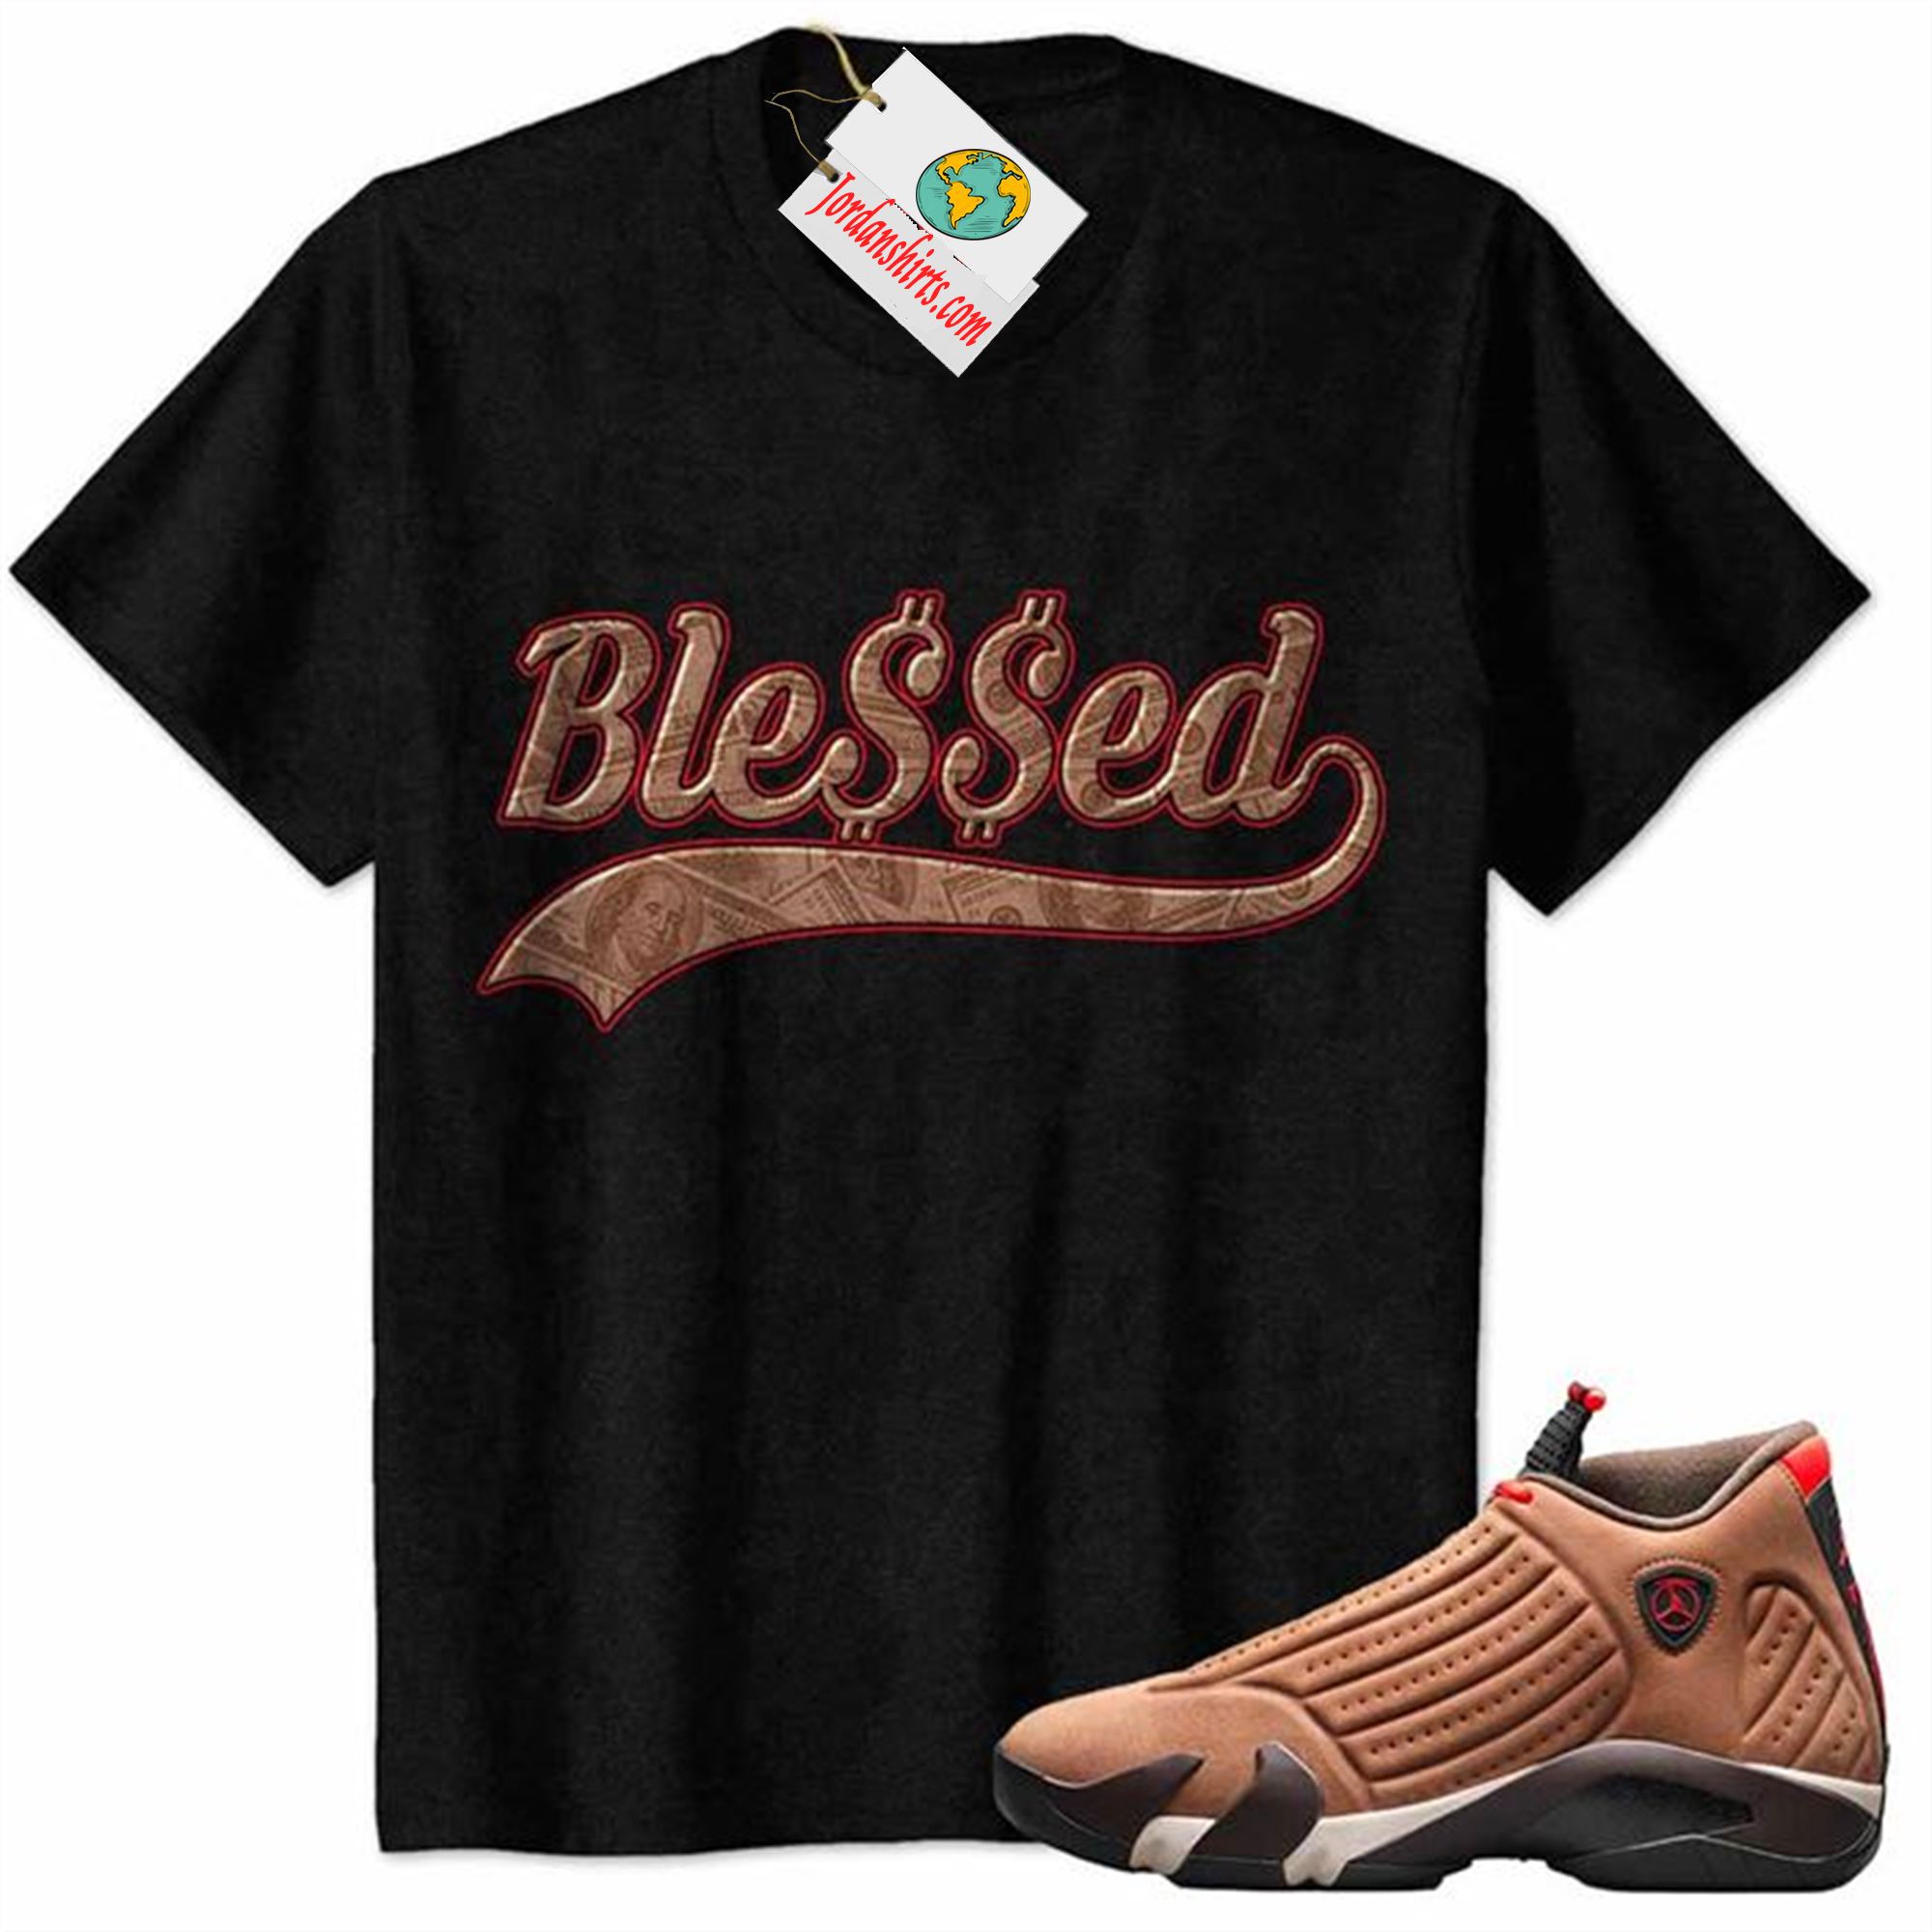 Jordan 14 Shirt, Blessed Usd Benjamin Franklin Black Air Jordan 14 Winterized 14s Full Size Up To 5xl